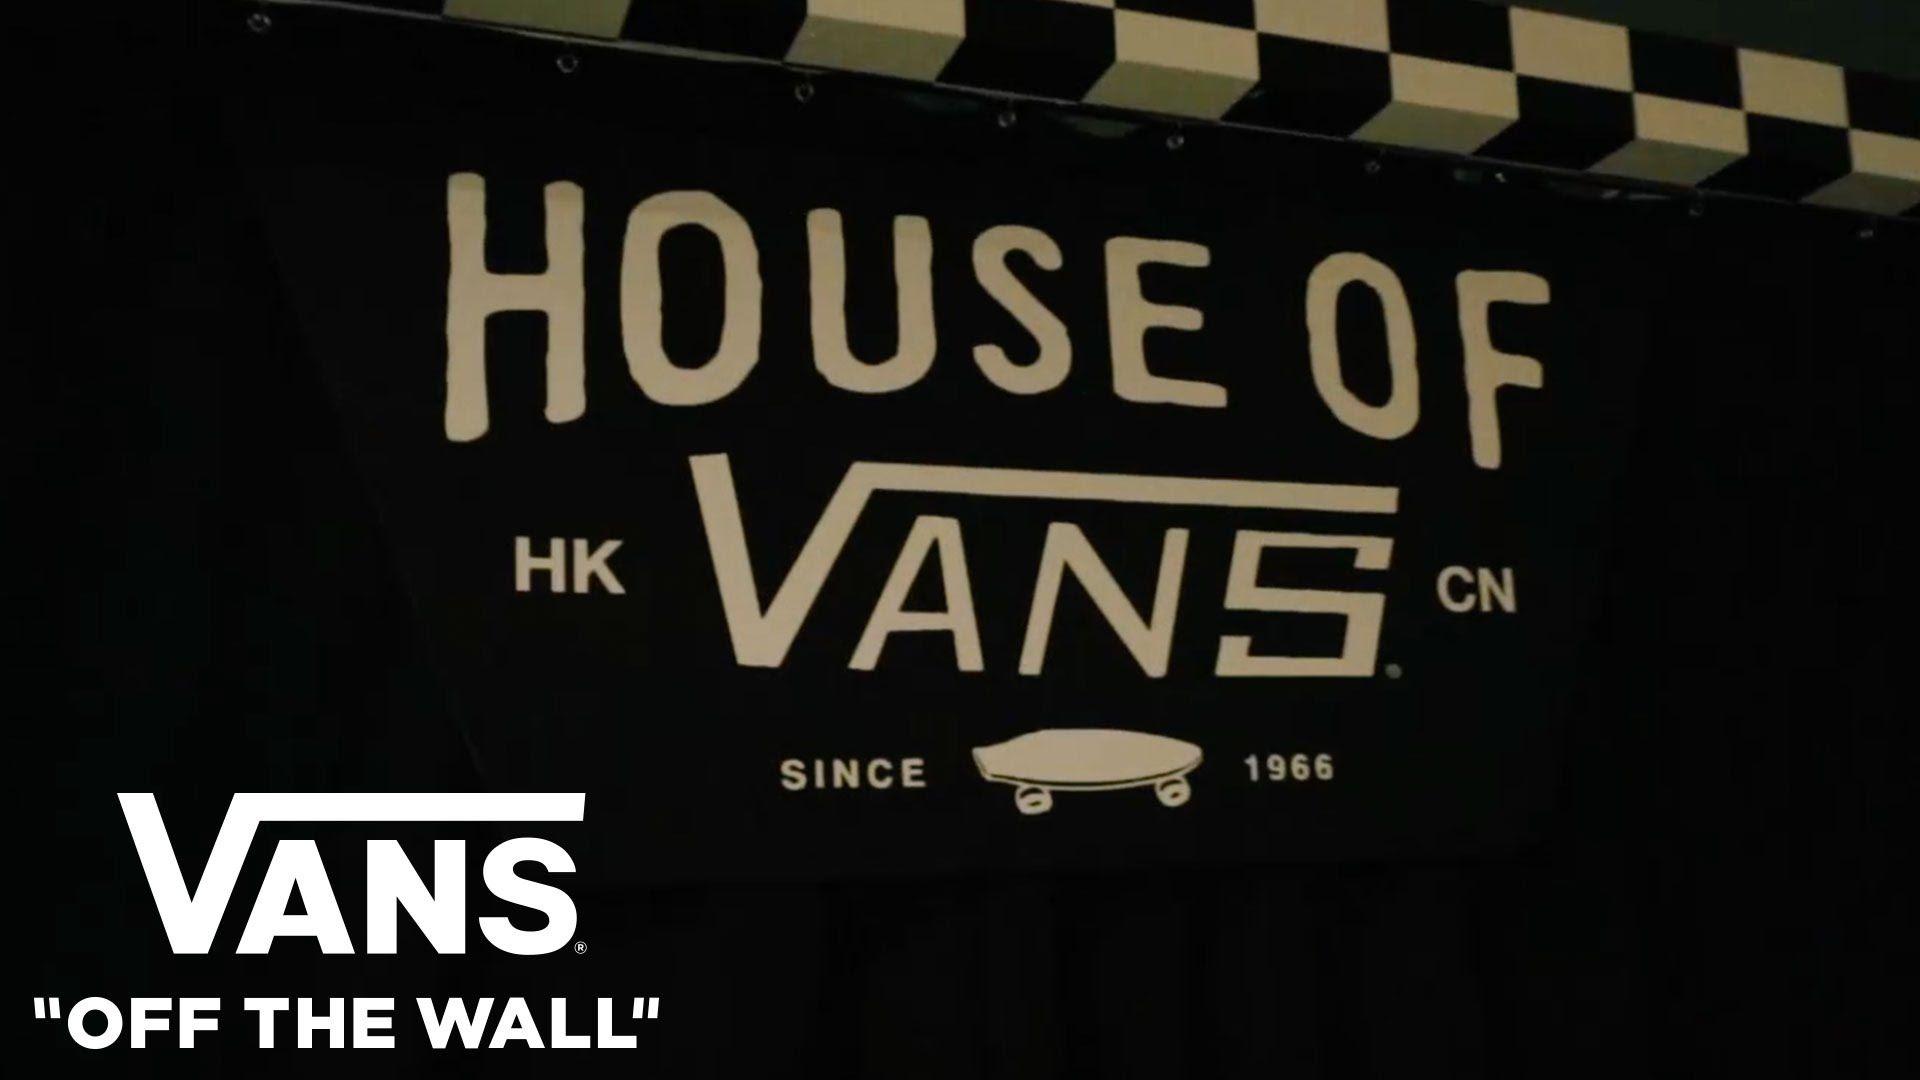 Vans 50th Anniversary Hong Kong Celebration 2016. House of Vans